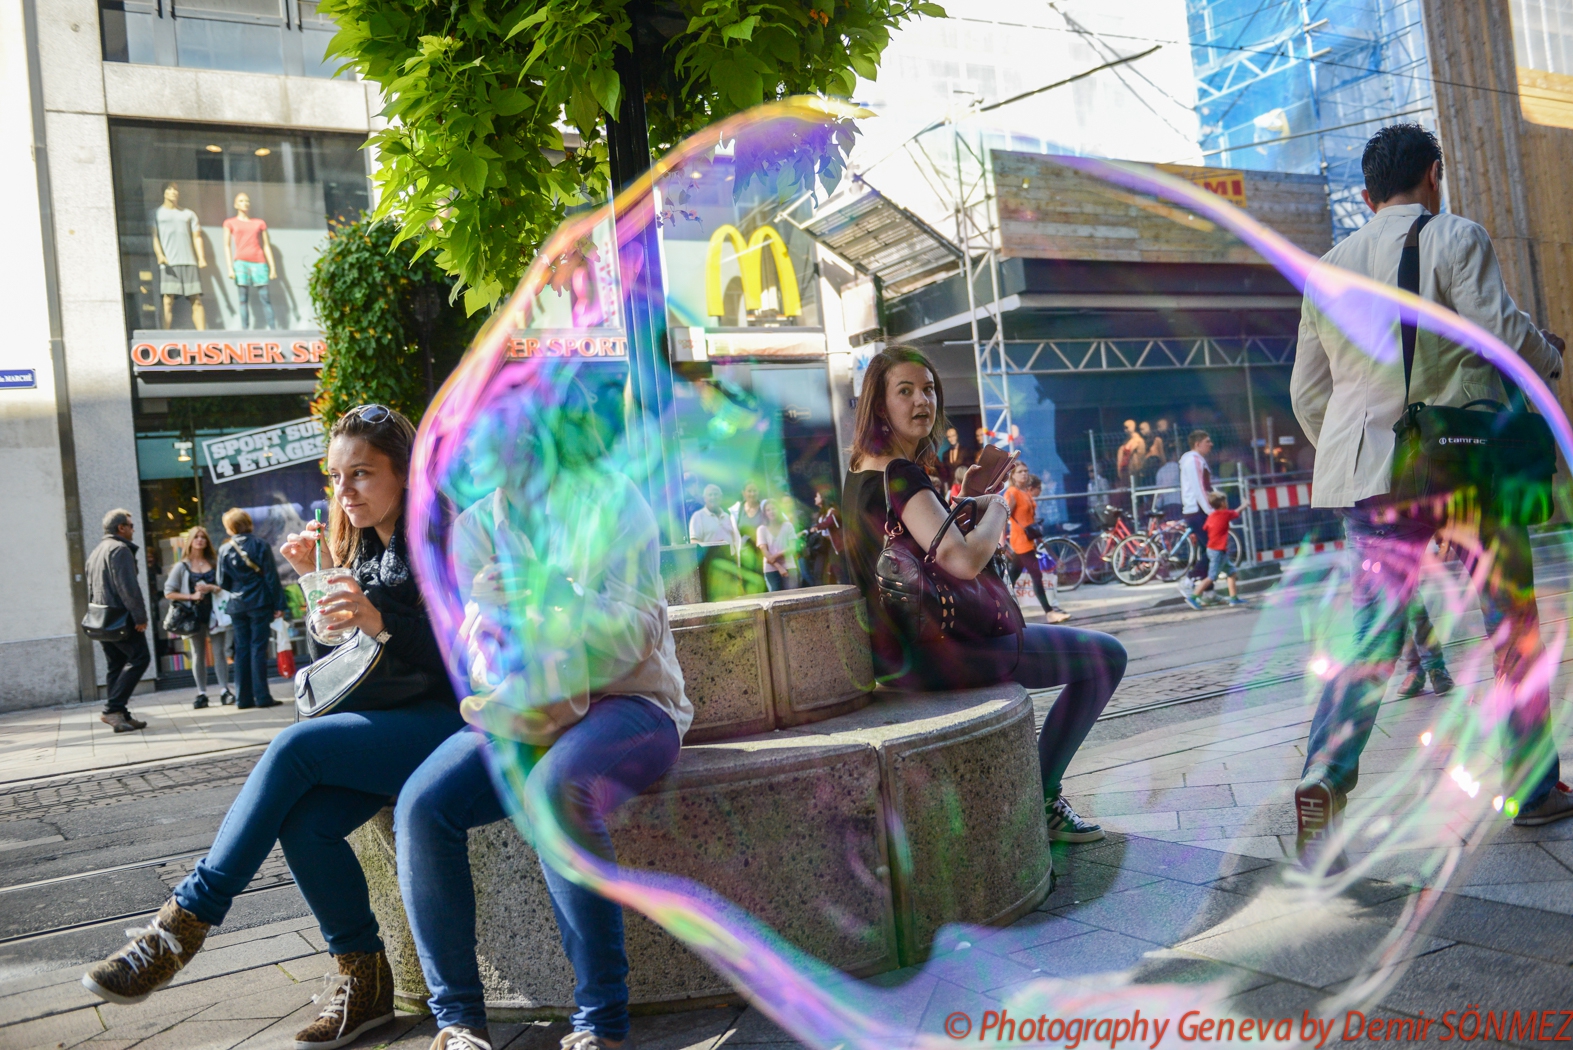 Les bulles  de savon dans  les rues basses-0127.jpg